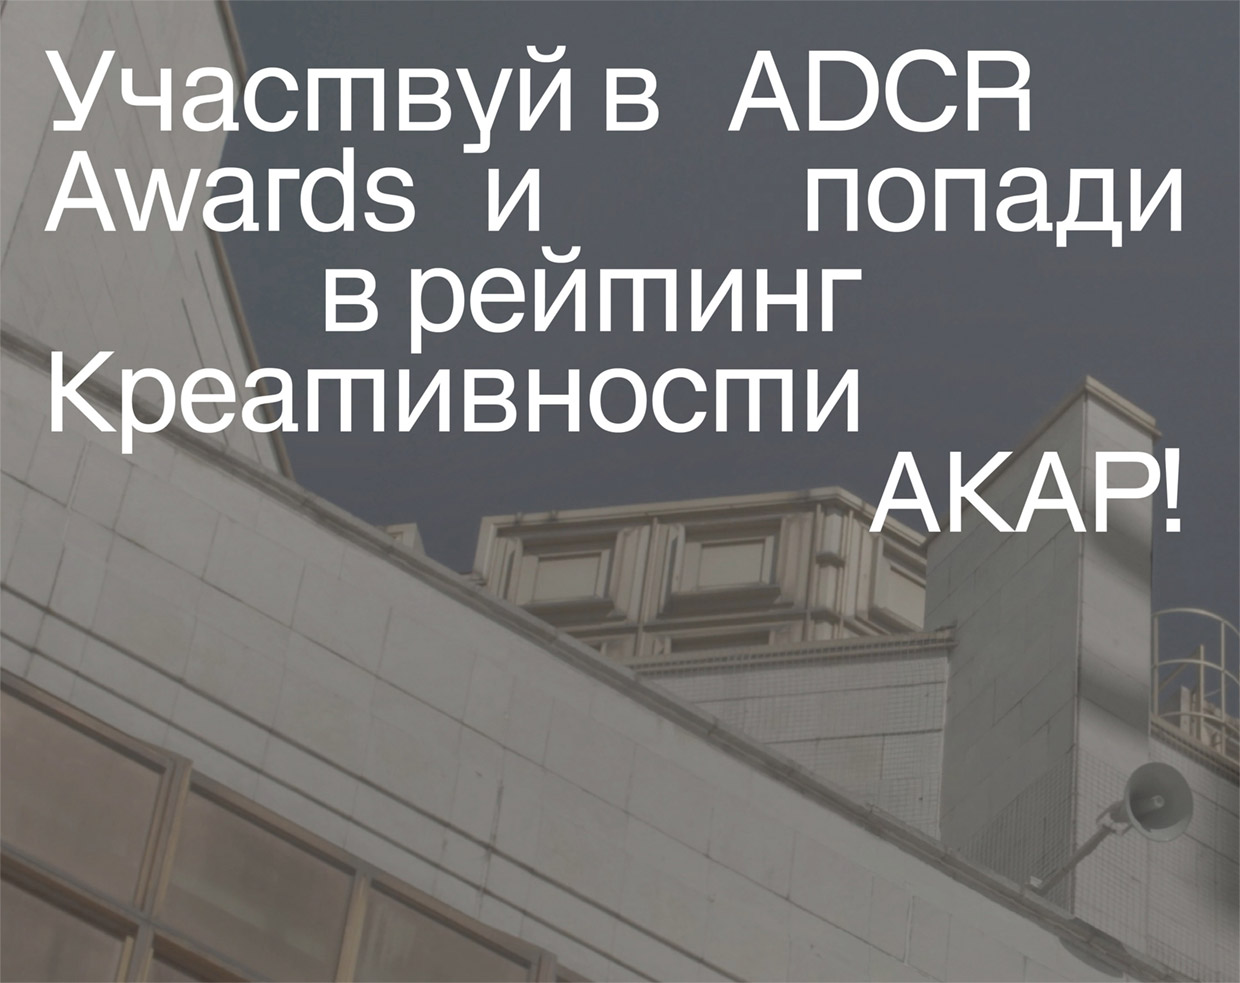    	ADCR Awards, 